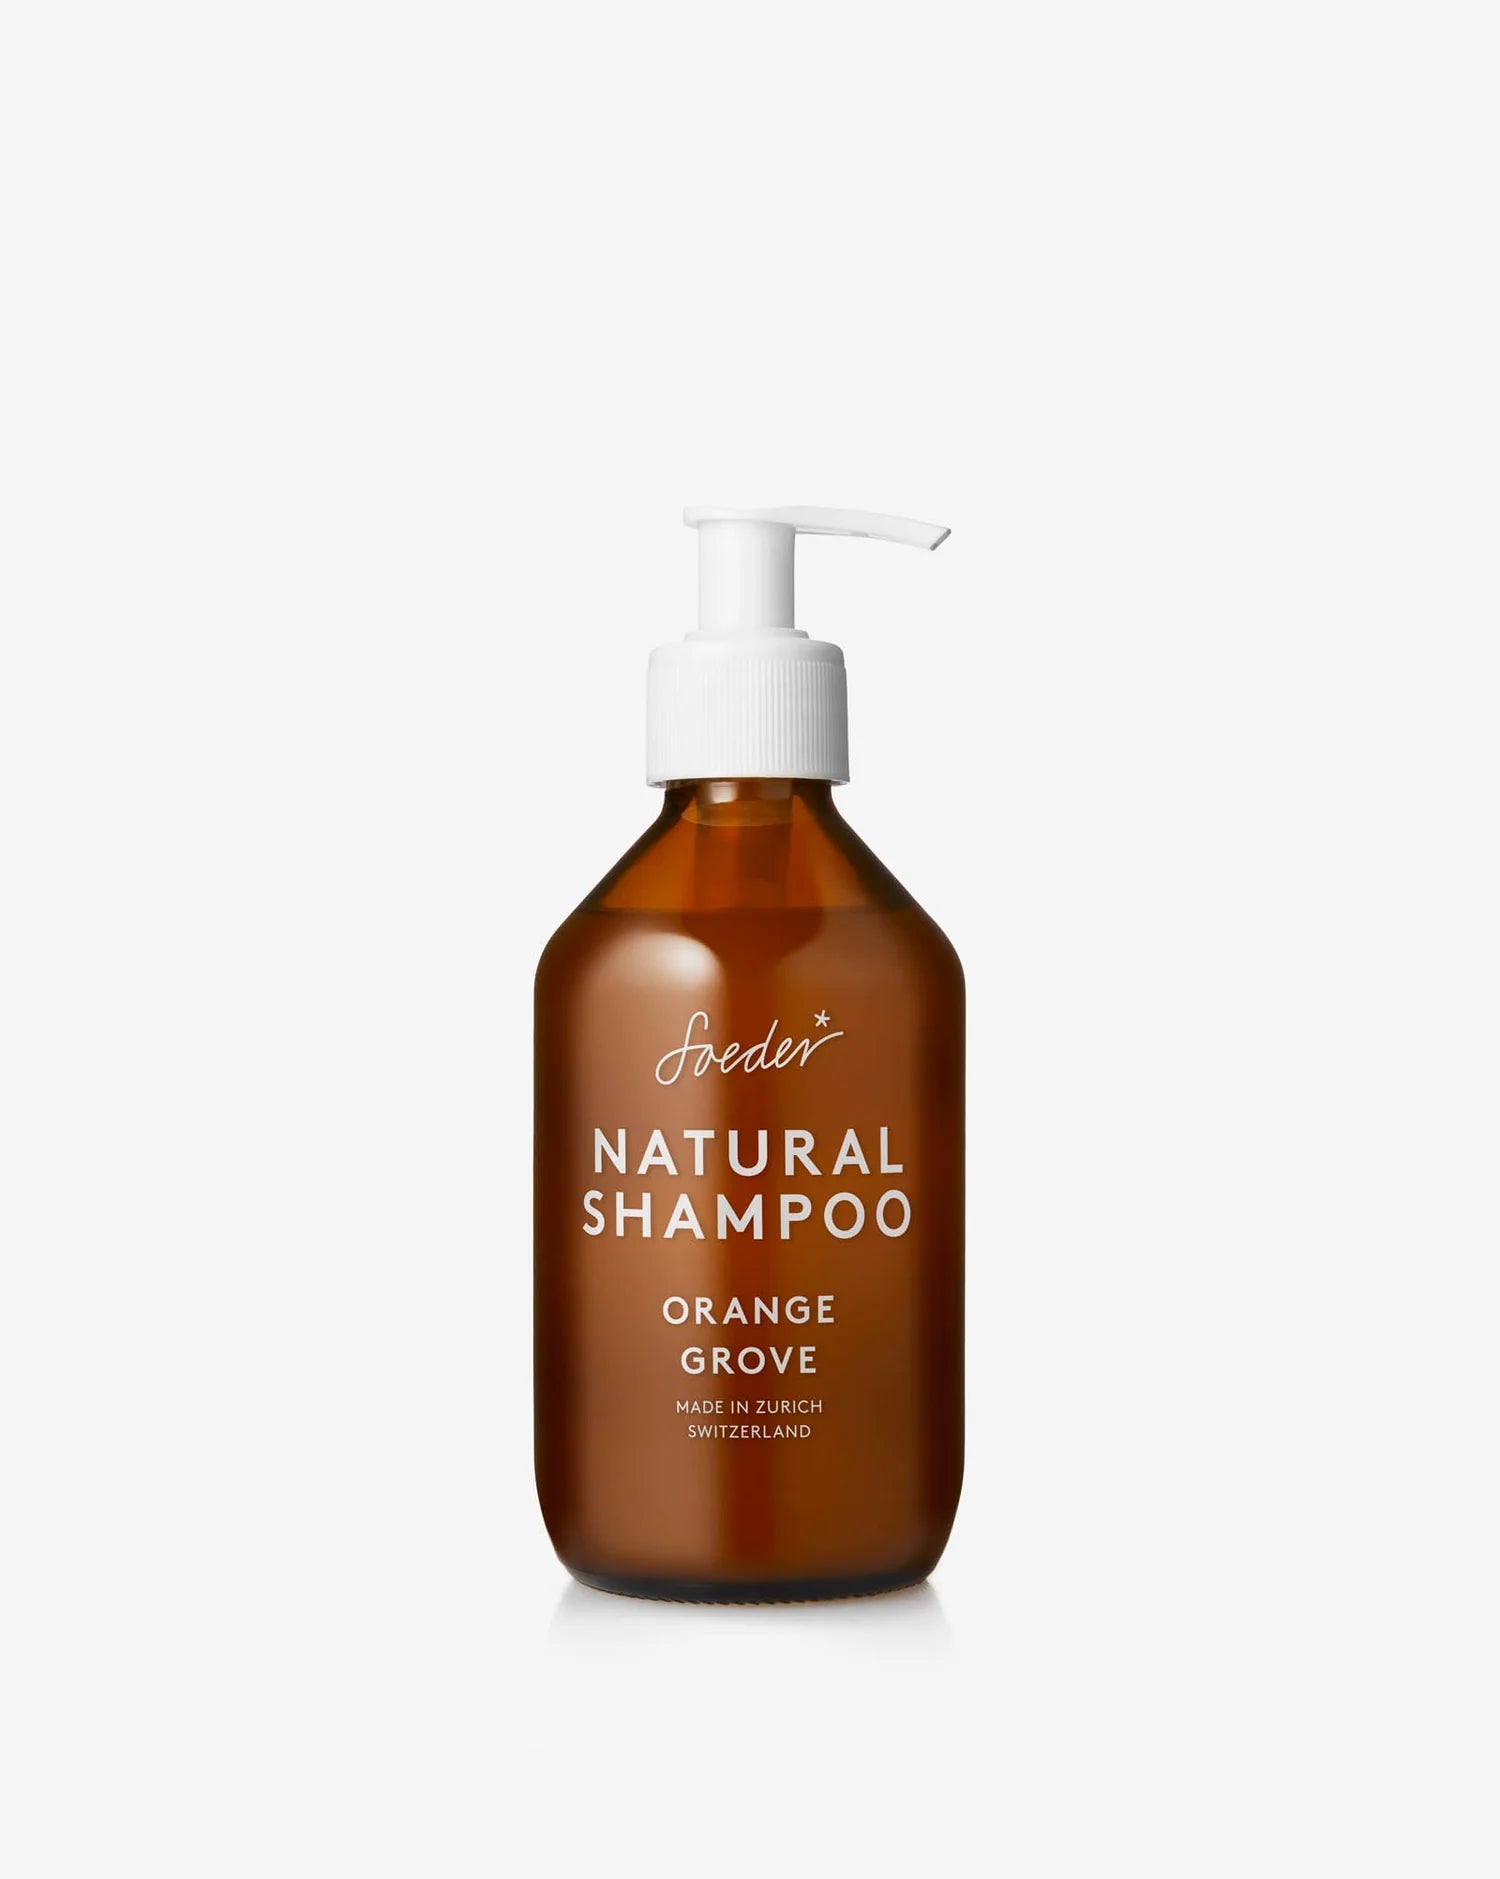 Soeder - Shampoo naturale "Orange Grove"